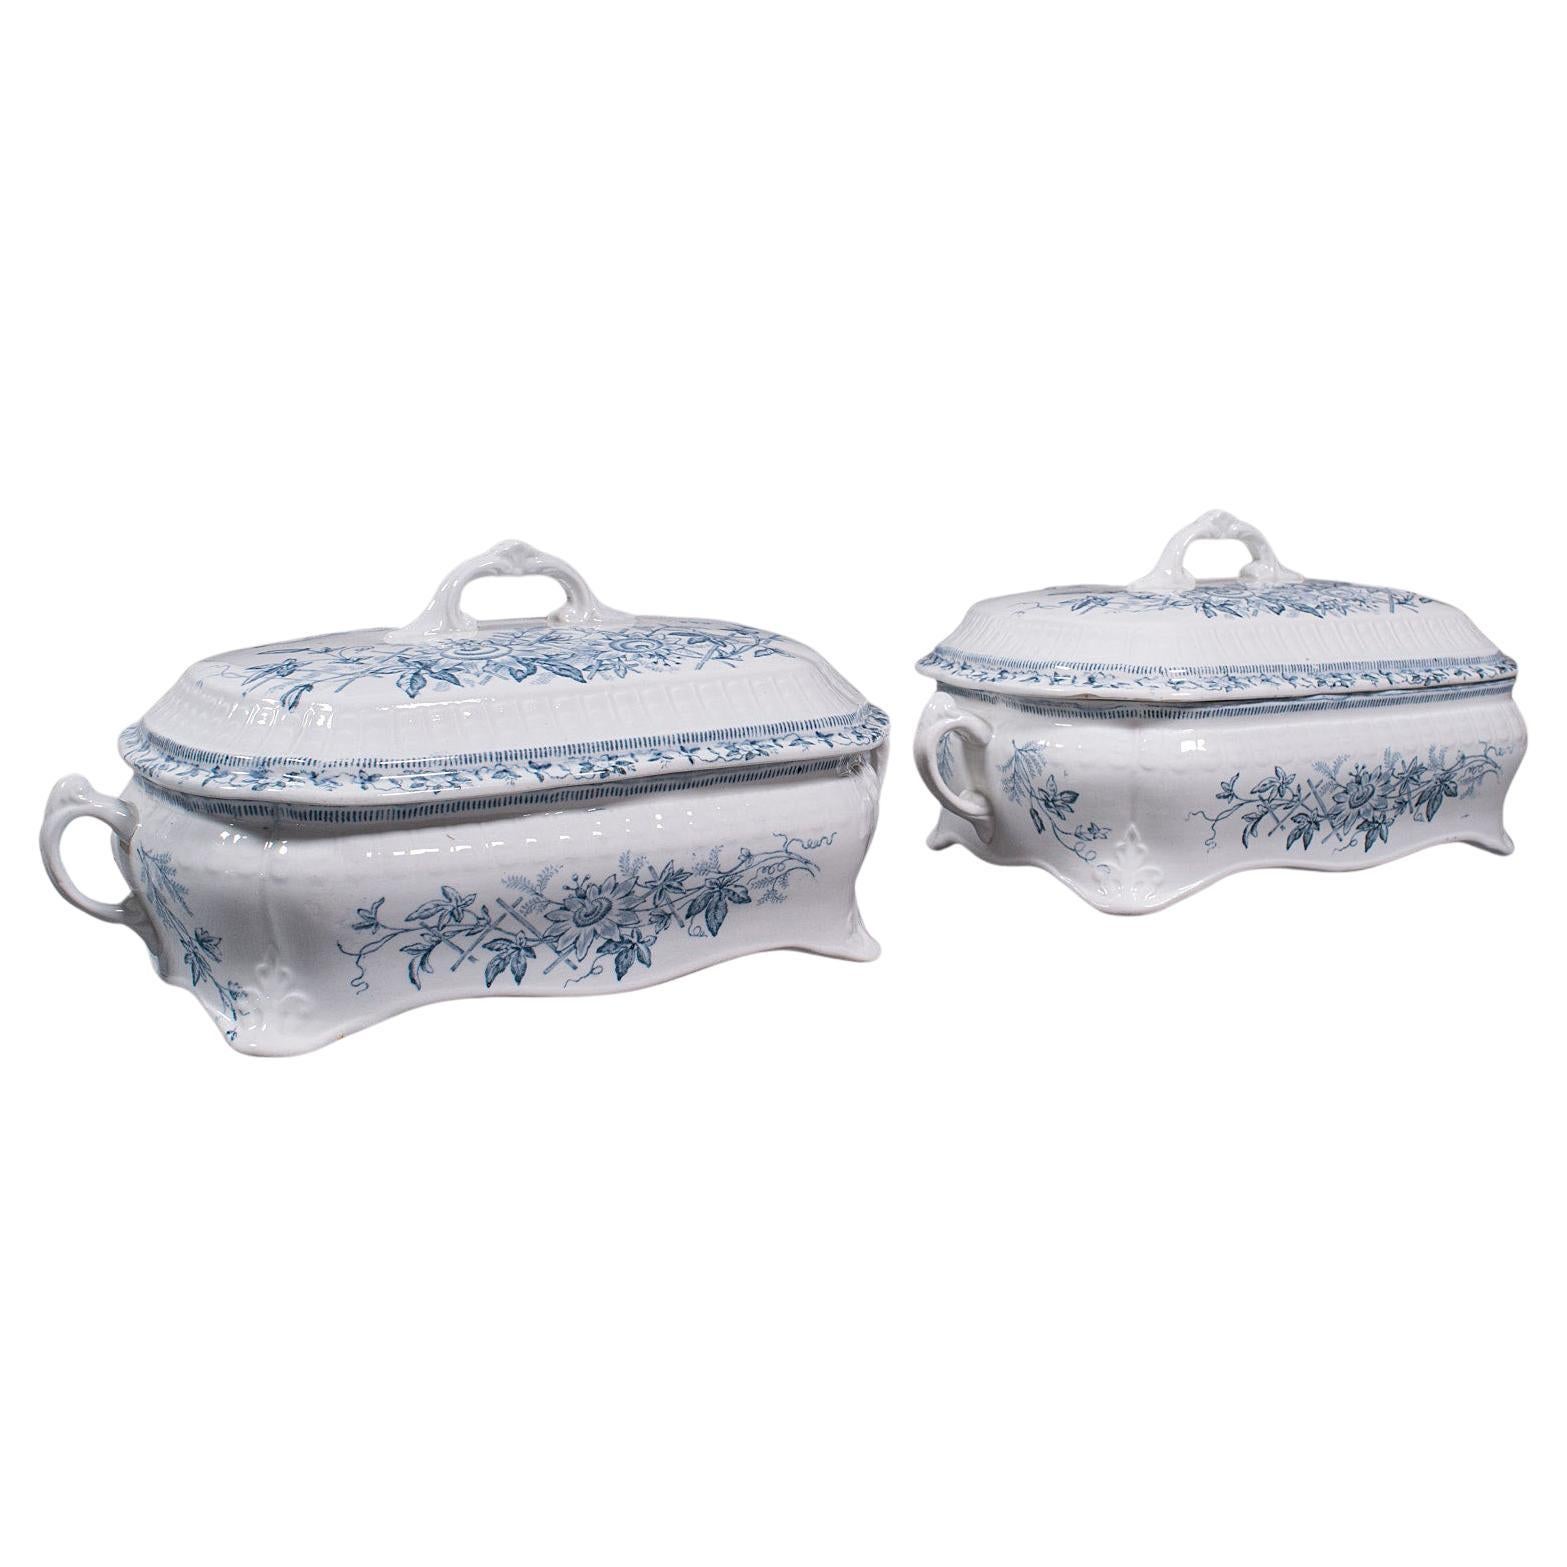 Pair of Antique Serving Tureens, English, Ceramic, Lidded Dish, Victorian, 1900